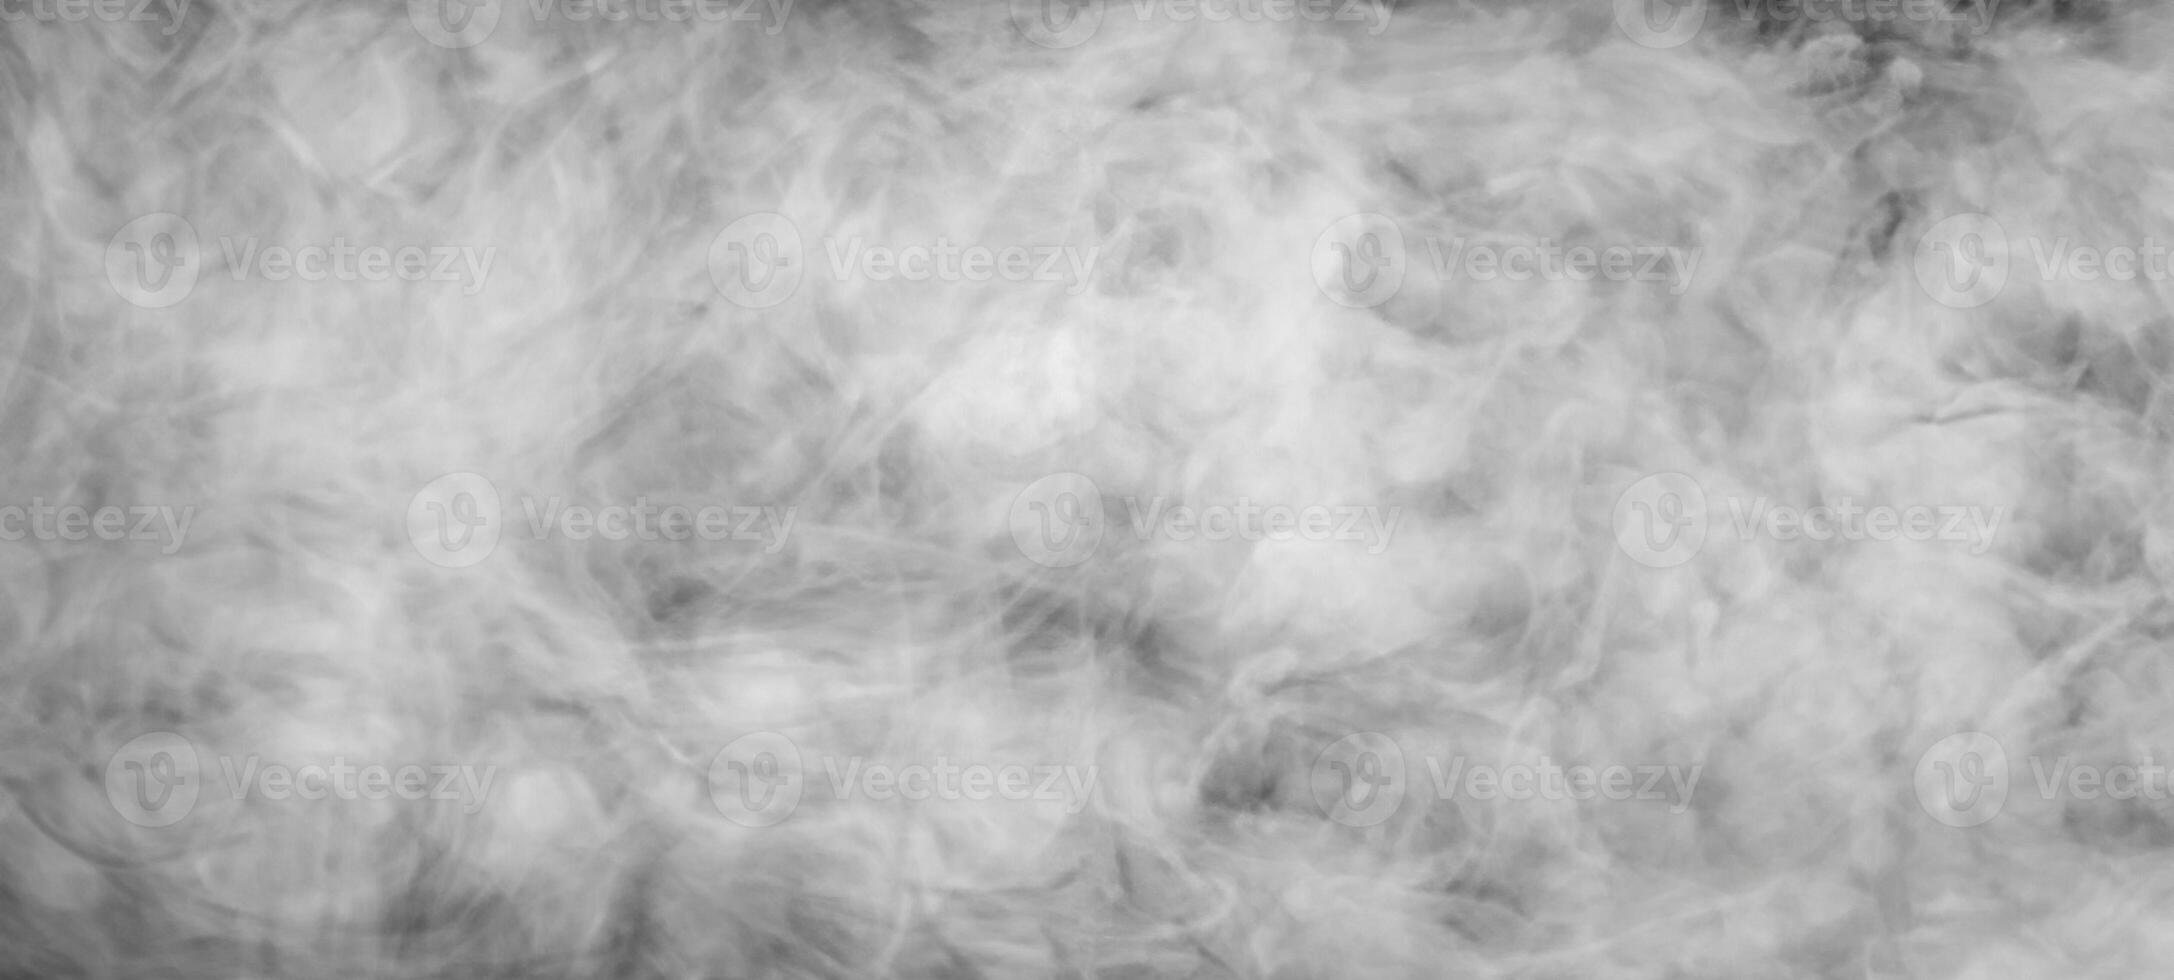 fumar terminado negro fondo, etéreo niebla o vapor textura foto